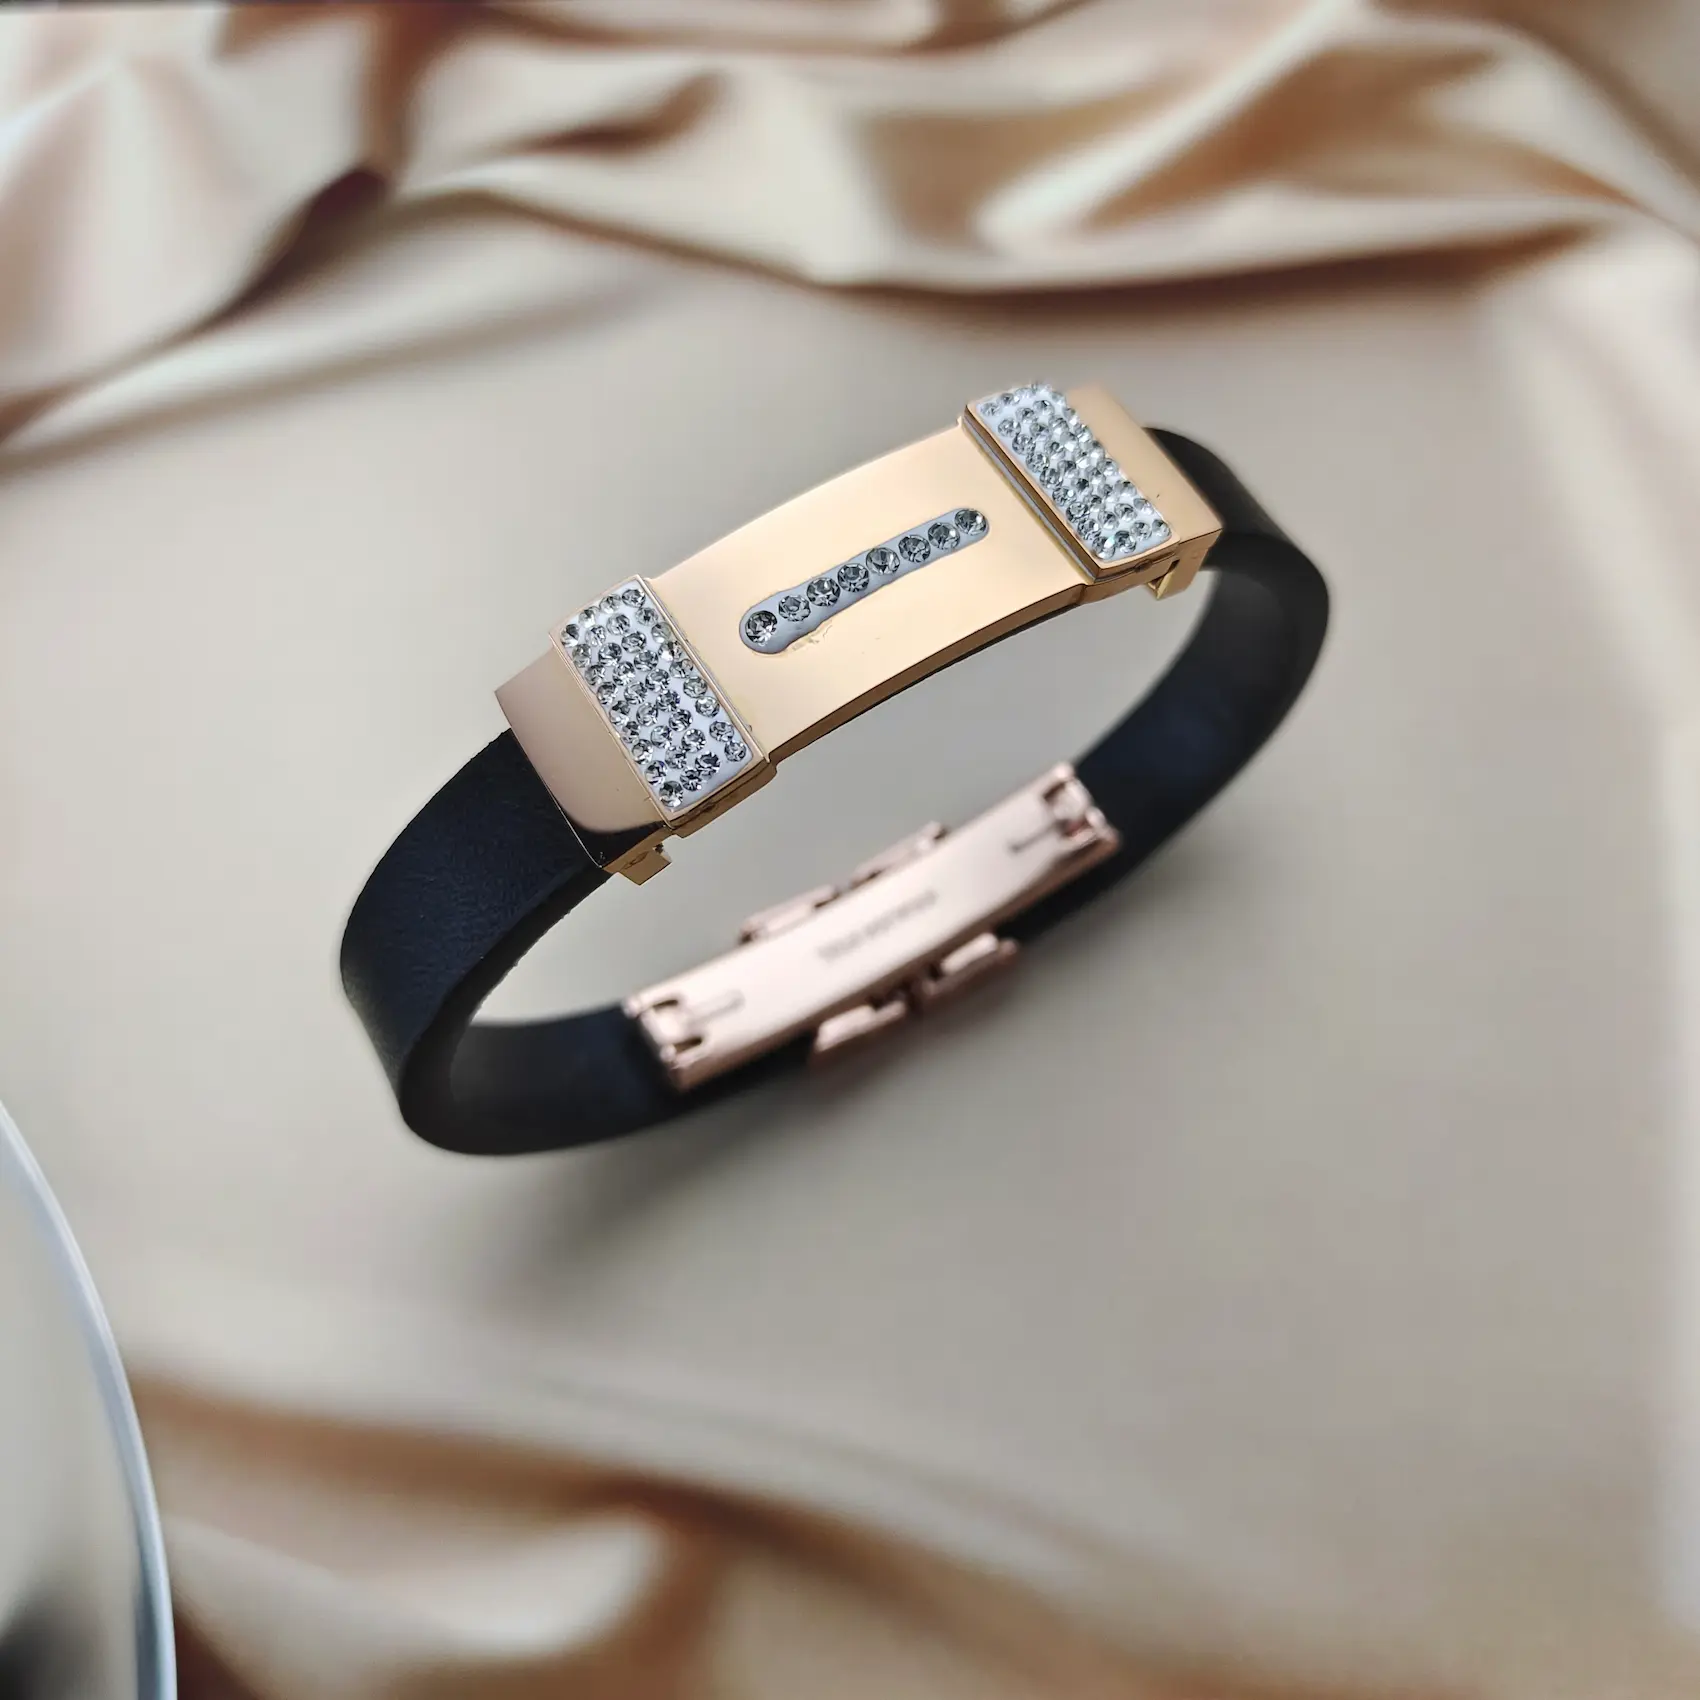 Cartier Love Bracelet replica with real gold and diamonds. : r/DesignerReps